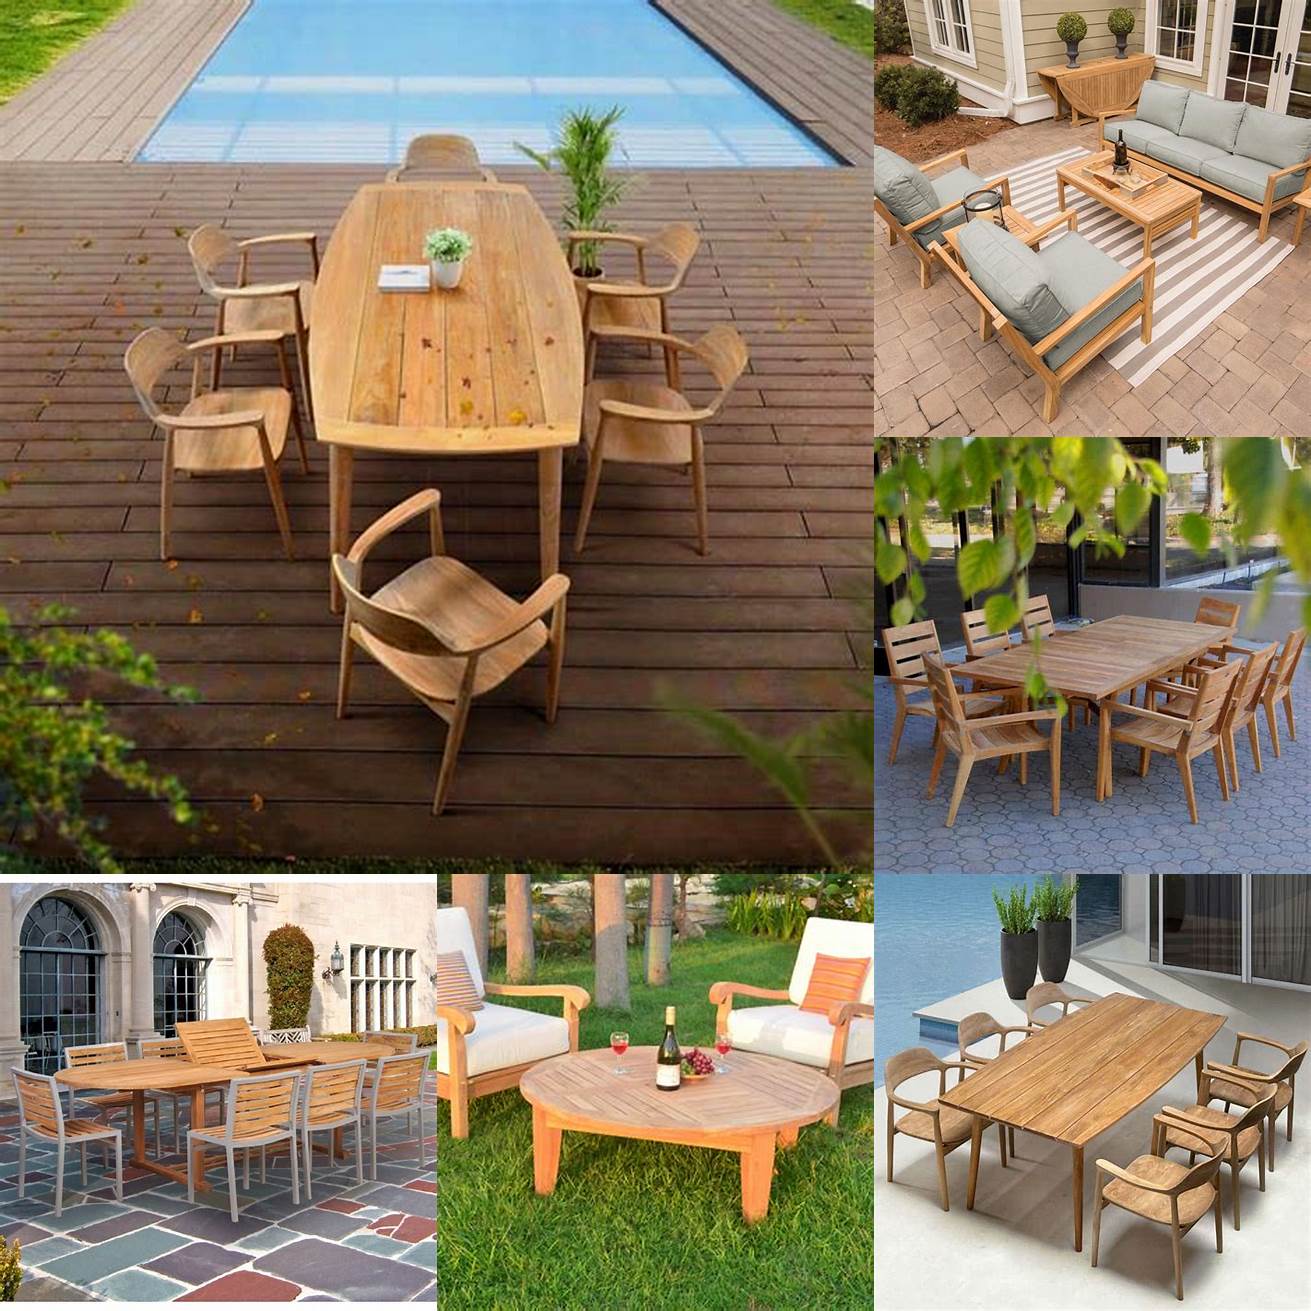 Teak furniture set in a modern outdoor setting